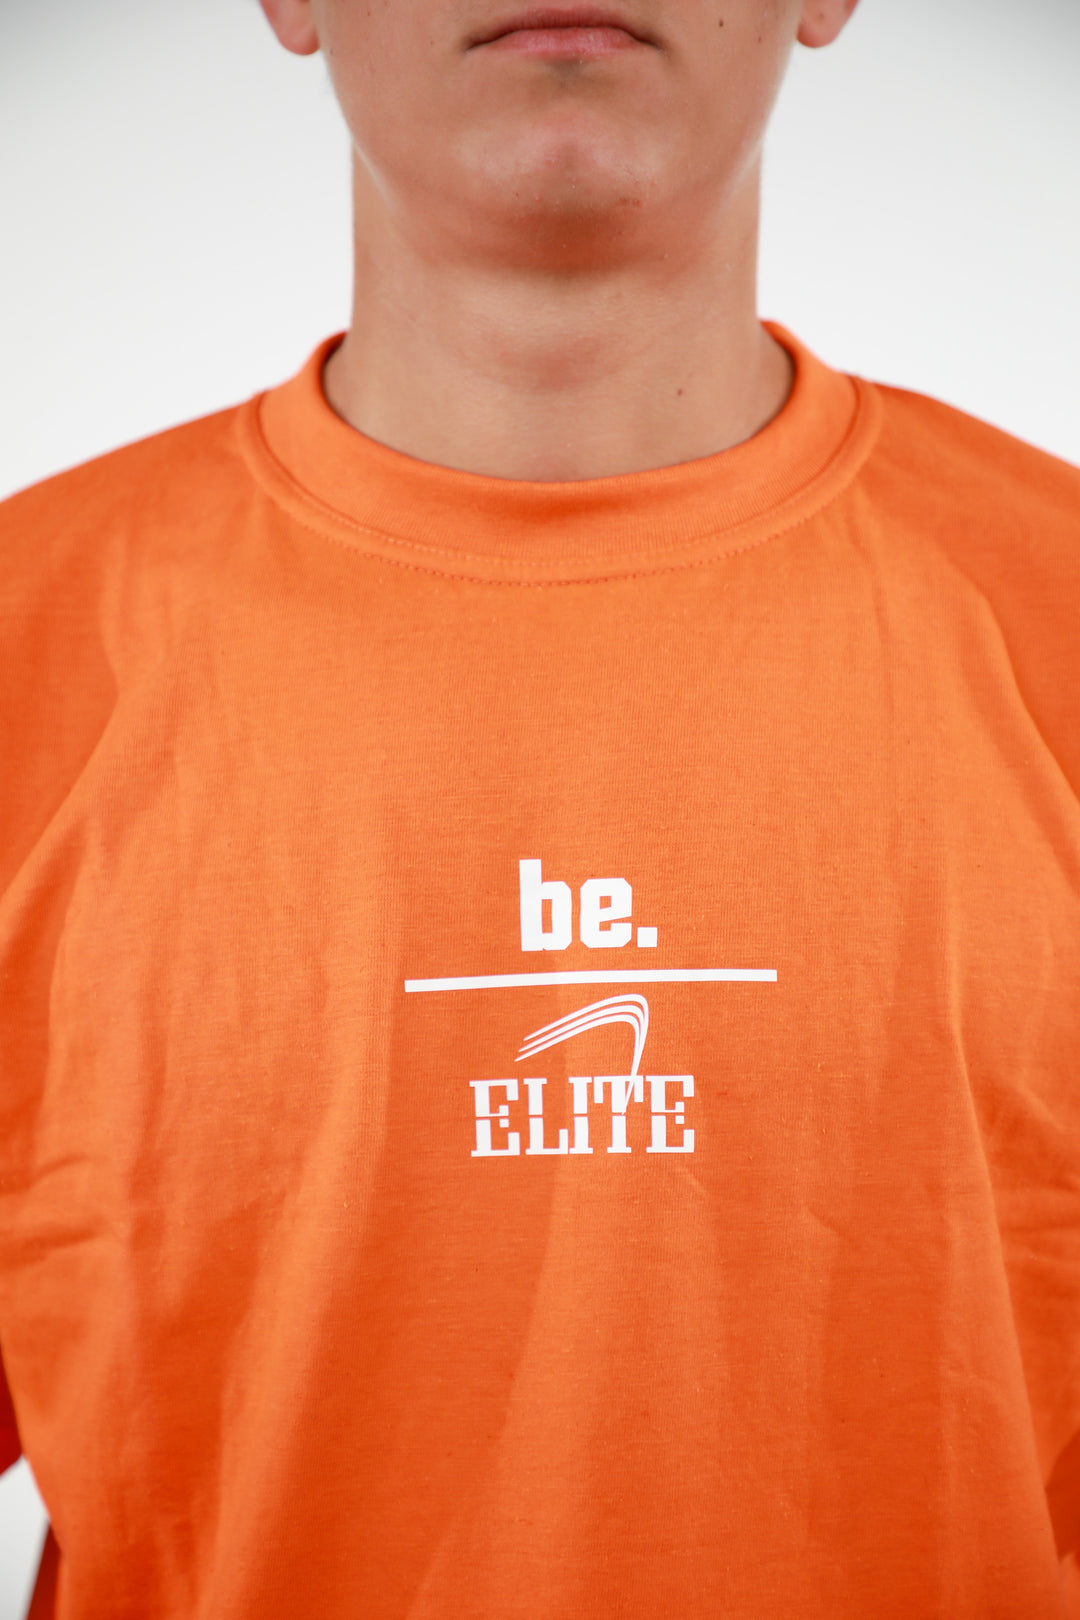 Elite - Shirt - Orange